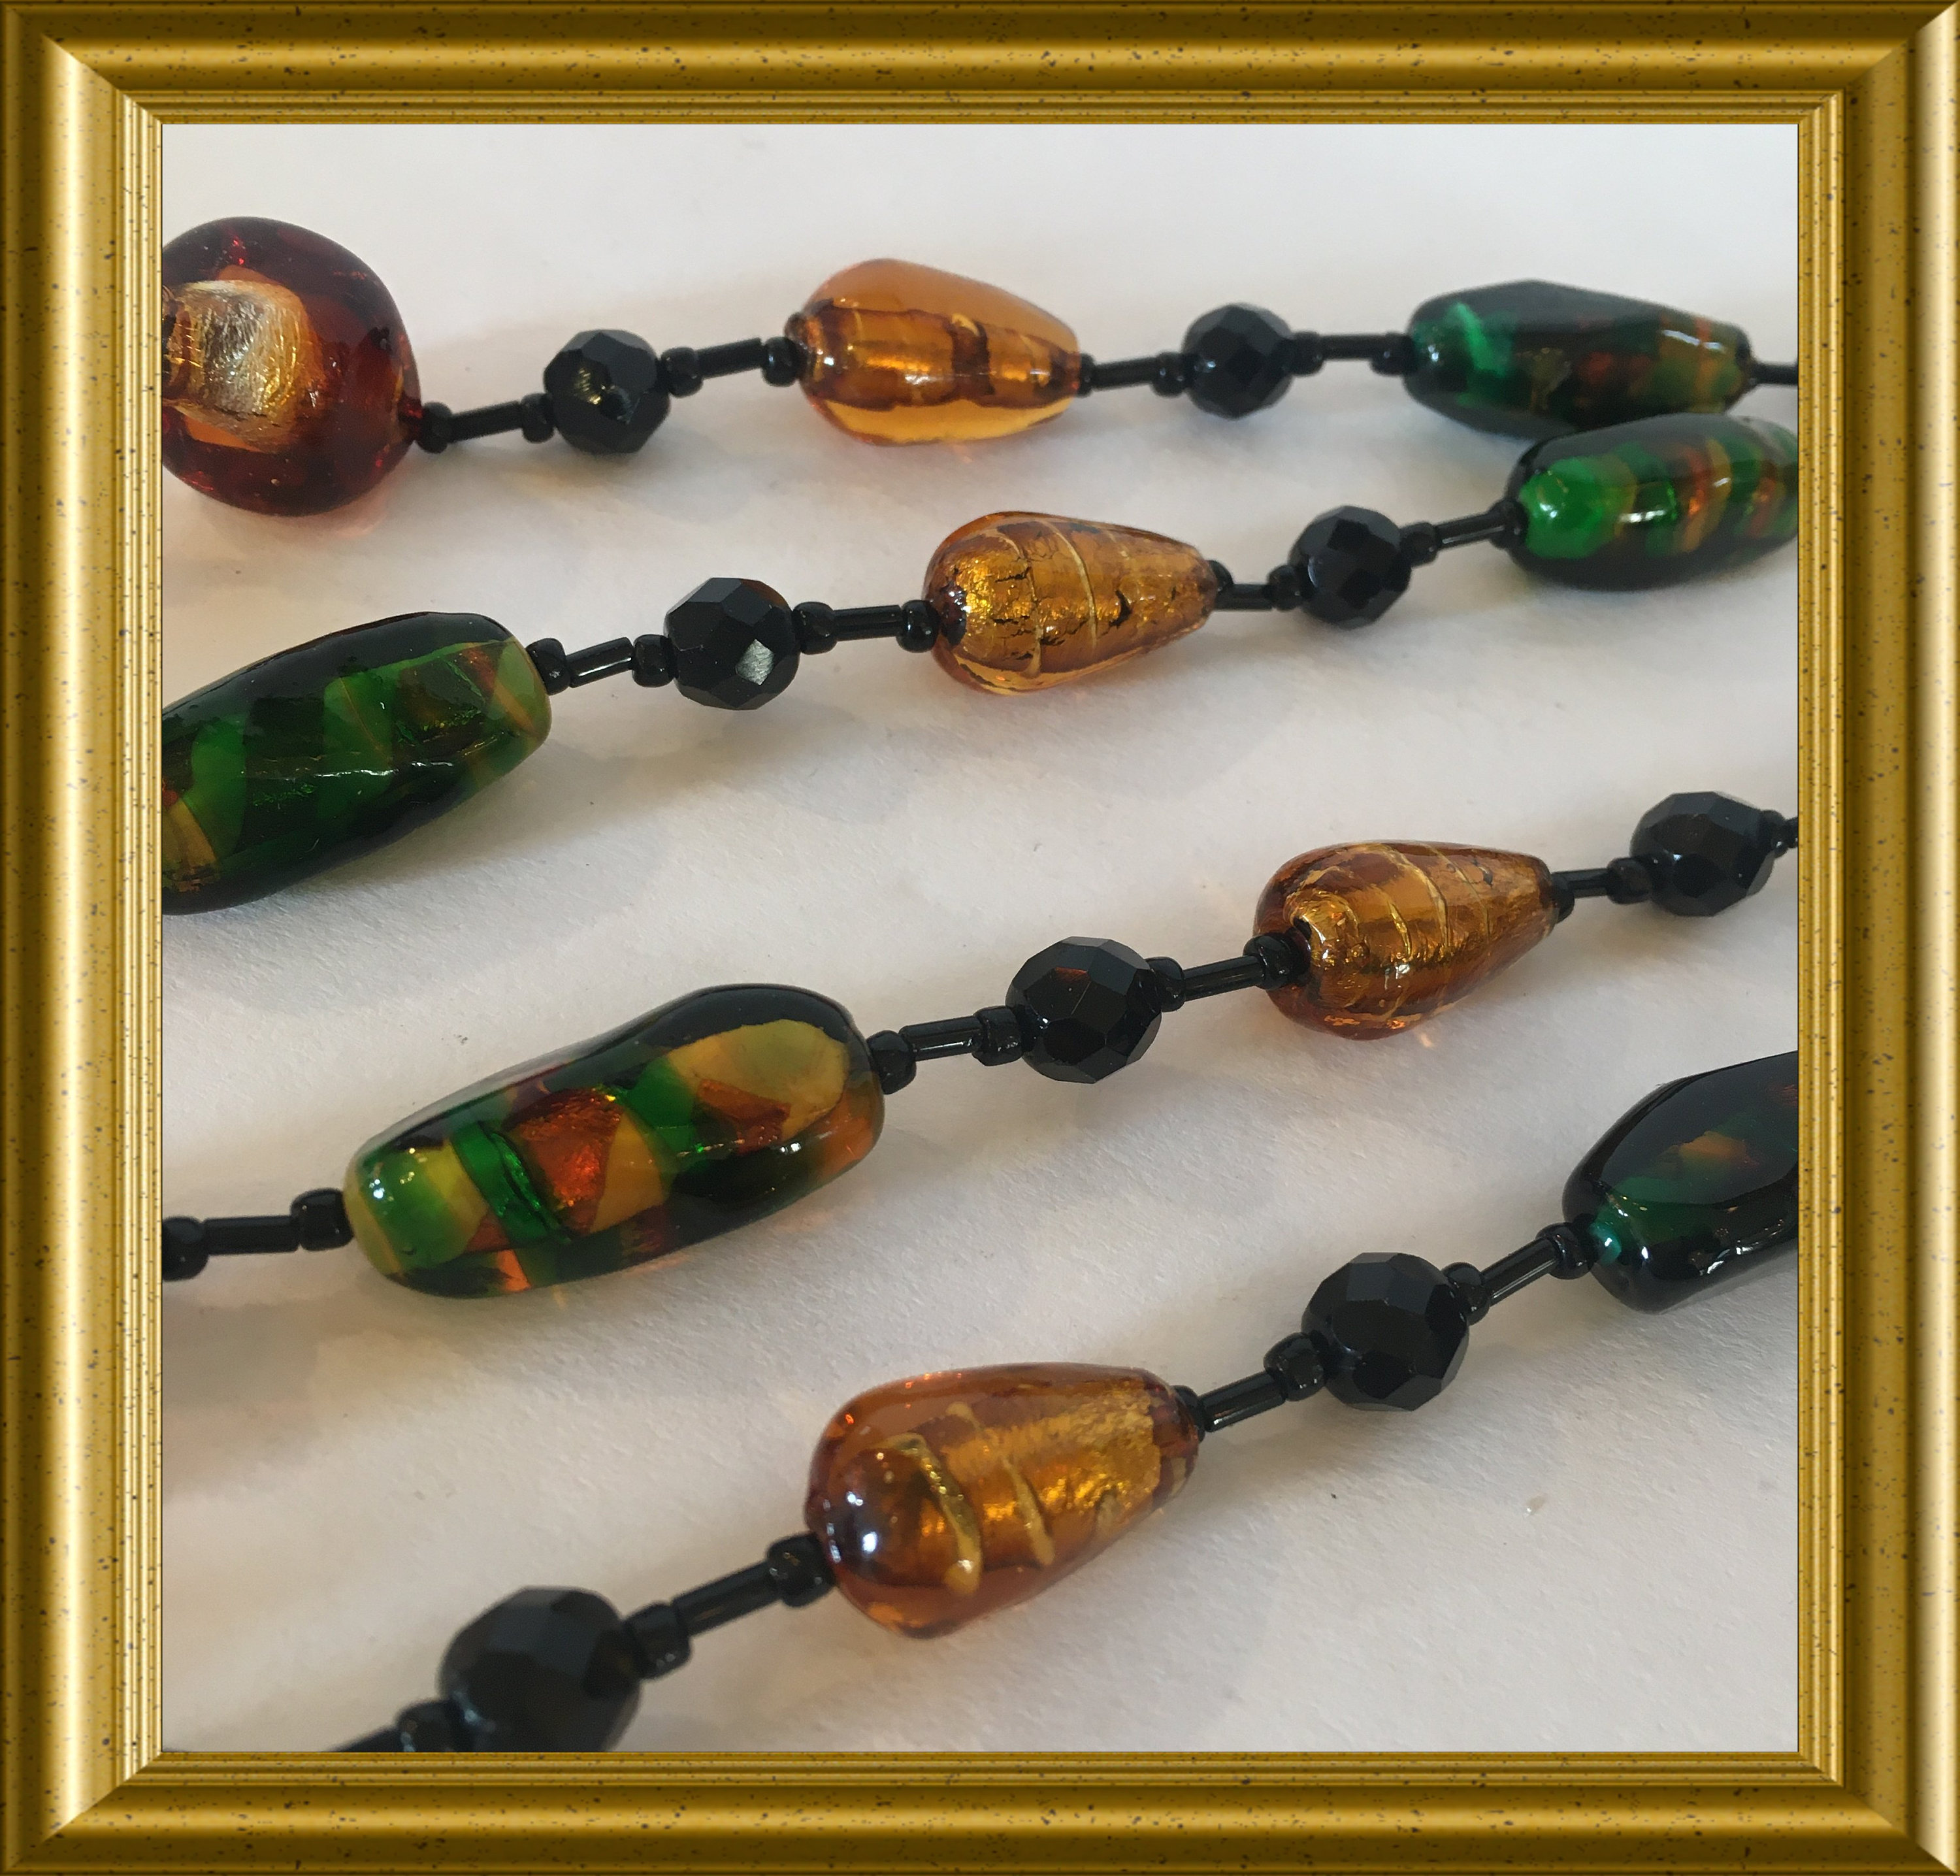 Glass Beads Bulk Beads Assorted Beads Assorted Glass Beads 1 Pound Beads  Wholesale Beads Assorted Beads Mix